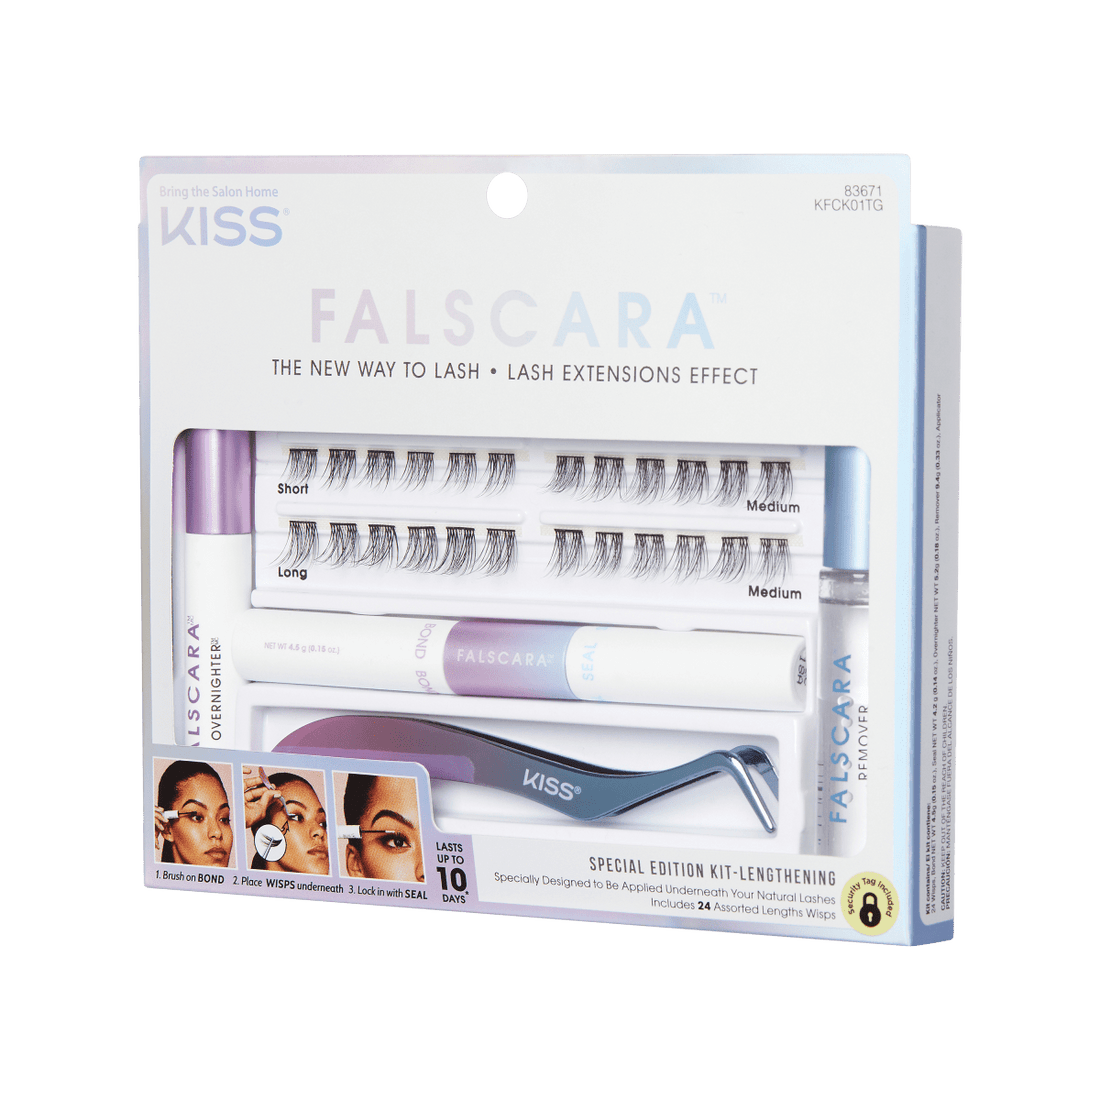 KISS Falscara Starter Kit Deluxe, Lash Clusters, Lengthening Wisps, 10mm-12mm-14mm, 24 Wisps